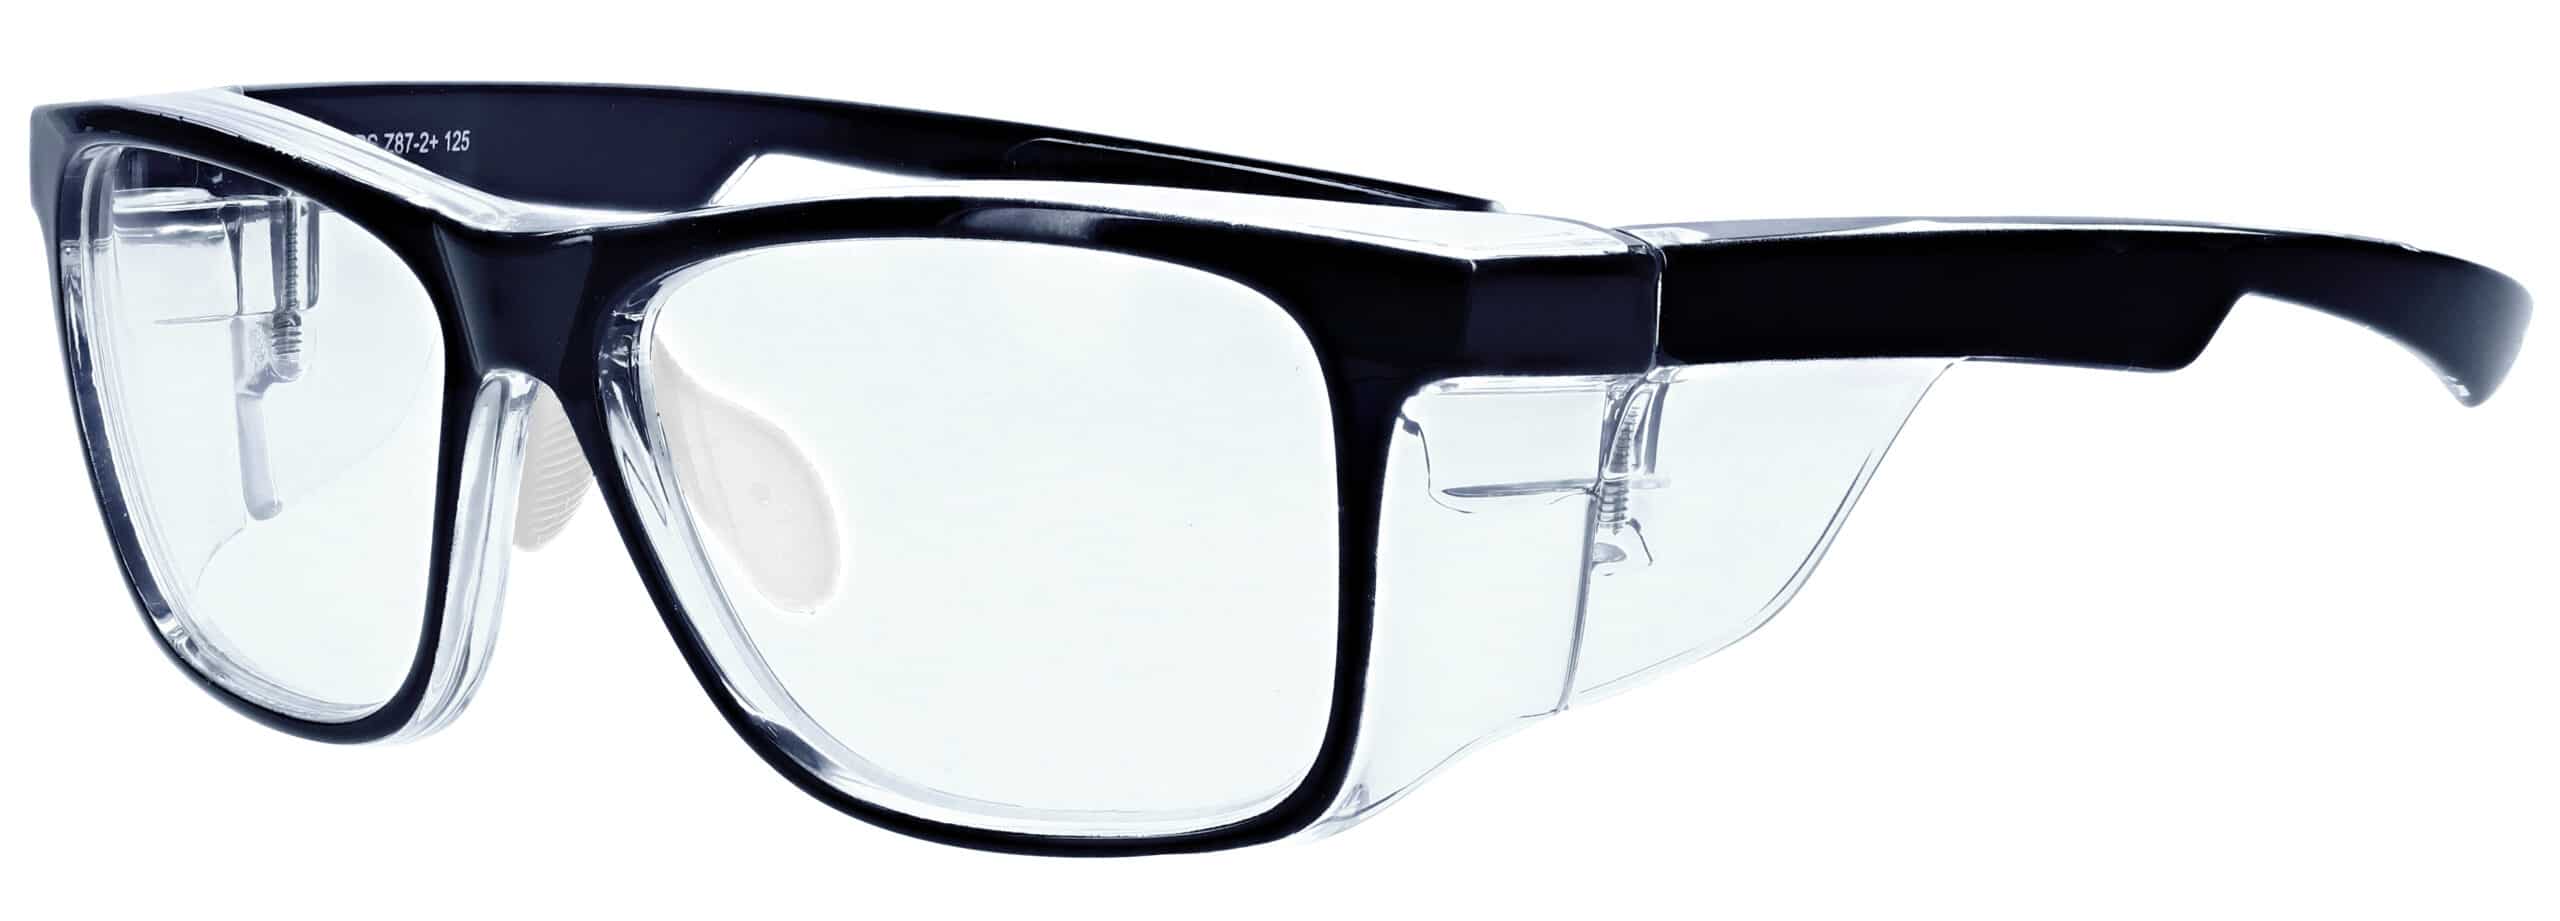 Safety Eyewear | Safety Glasses and Eye Protection